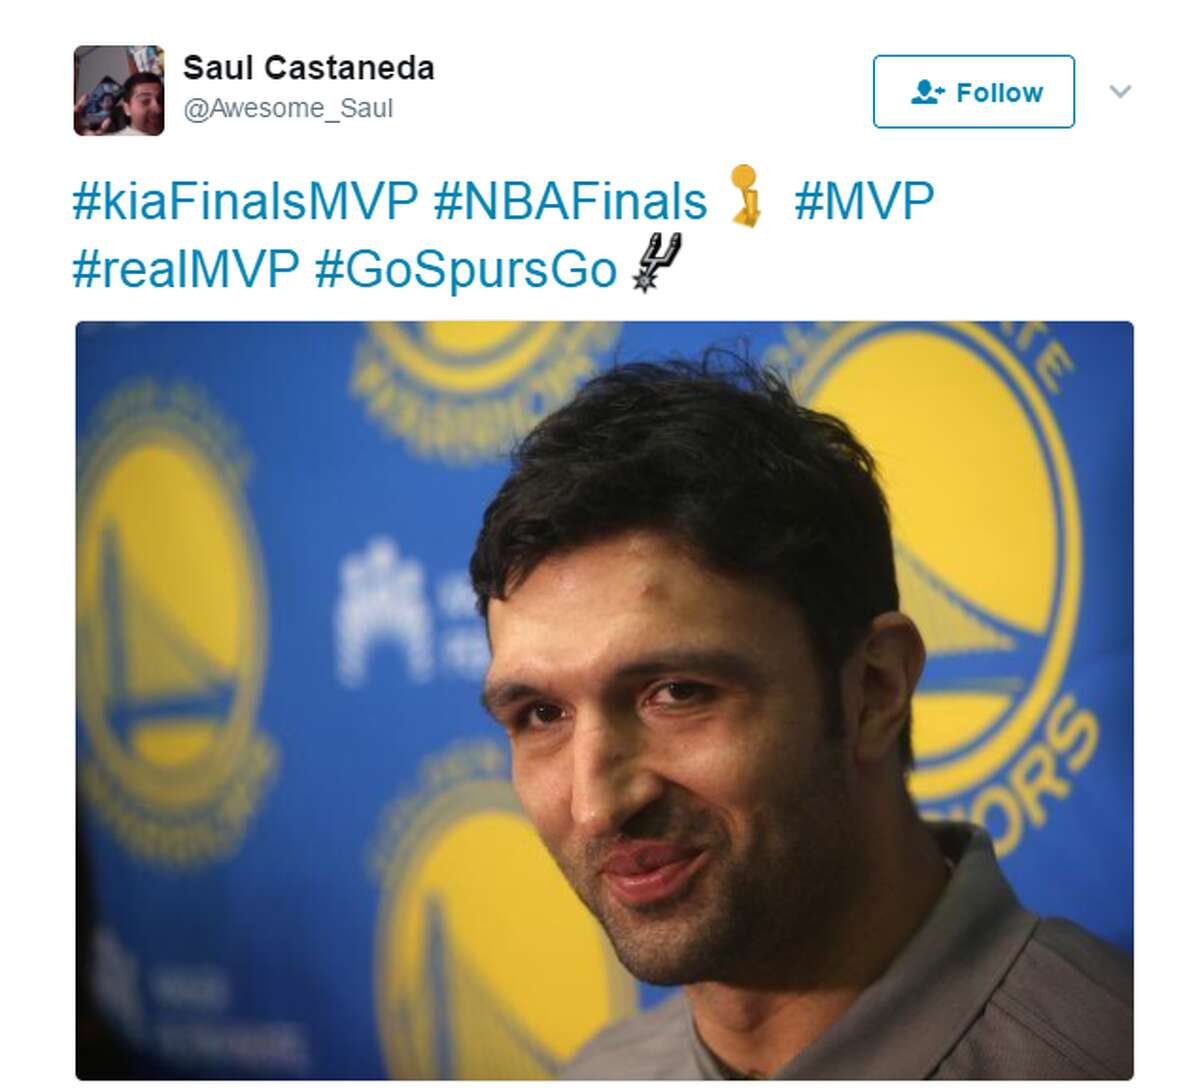 @Awesome_Saul: #kiaFinalsMVP #NBAFinals #MVP #realMVP #GoSpursGo